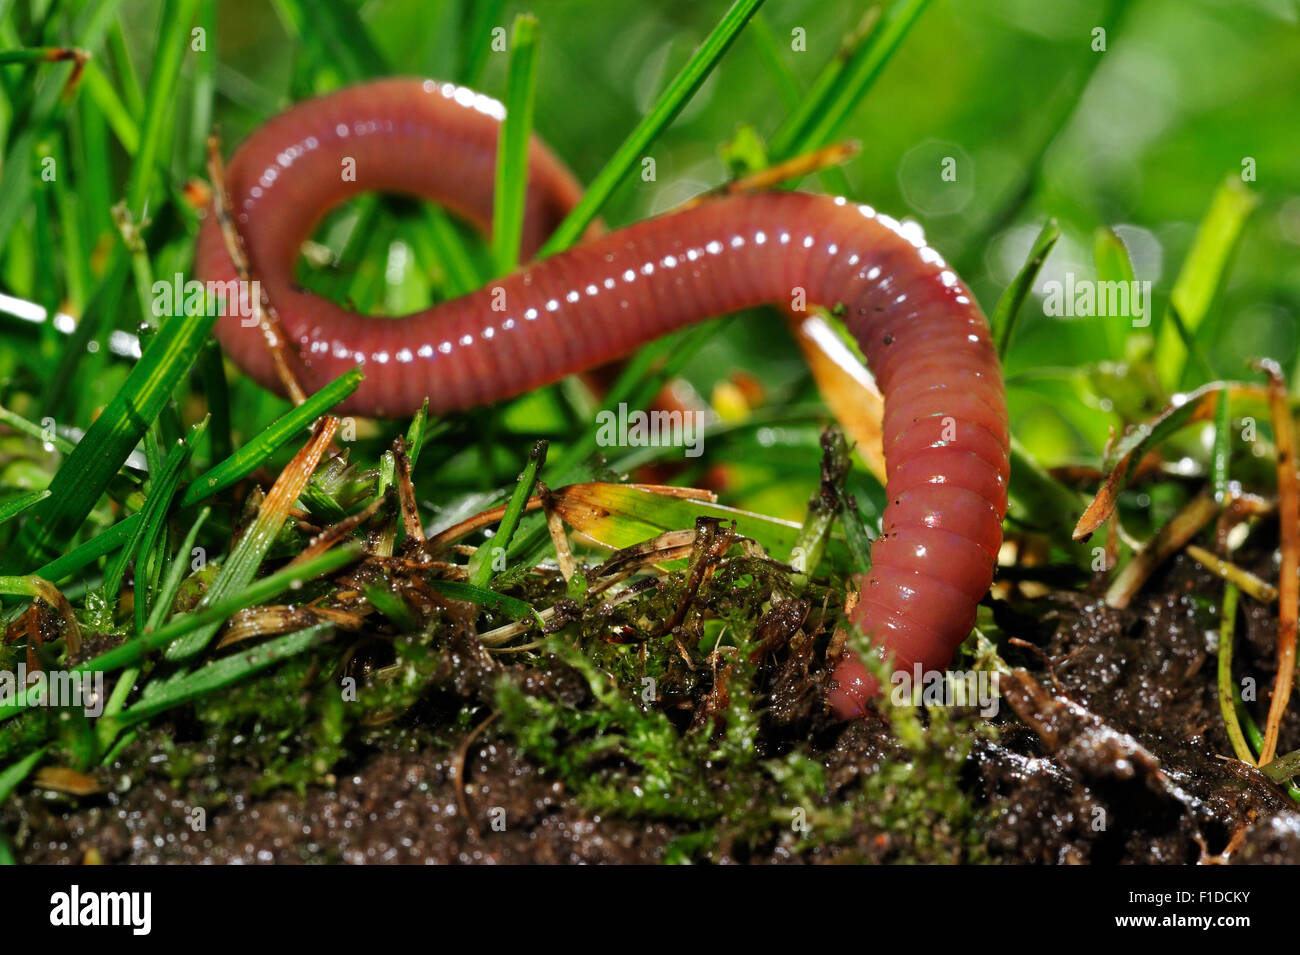 Common earthworm / lob worm (Lumbricus terrestris) burrowing into the ground in garden lawn Stock Photo